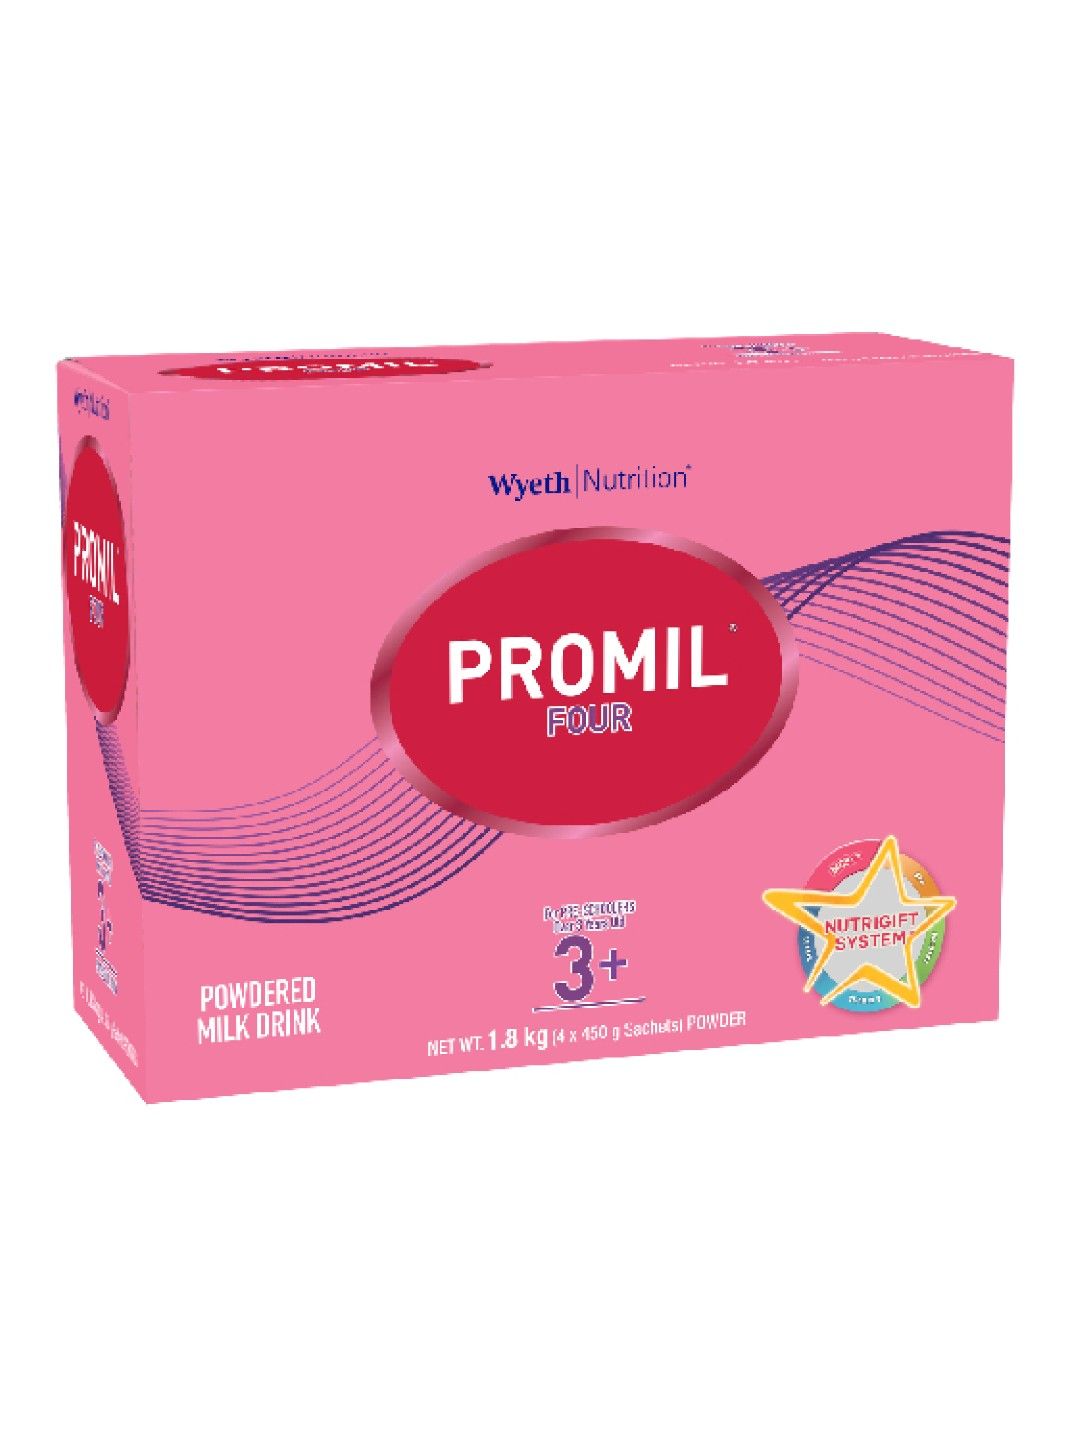 Promil Promil Four (1.8kg)